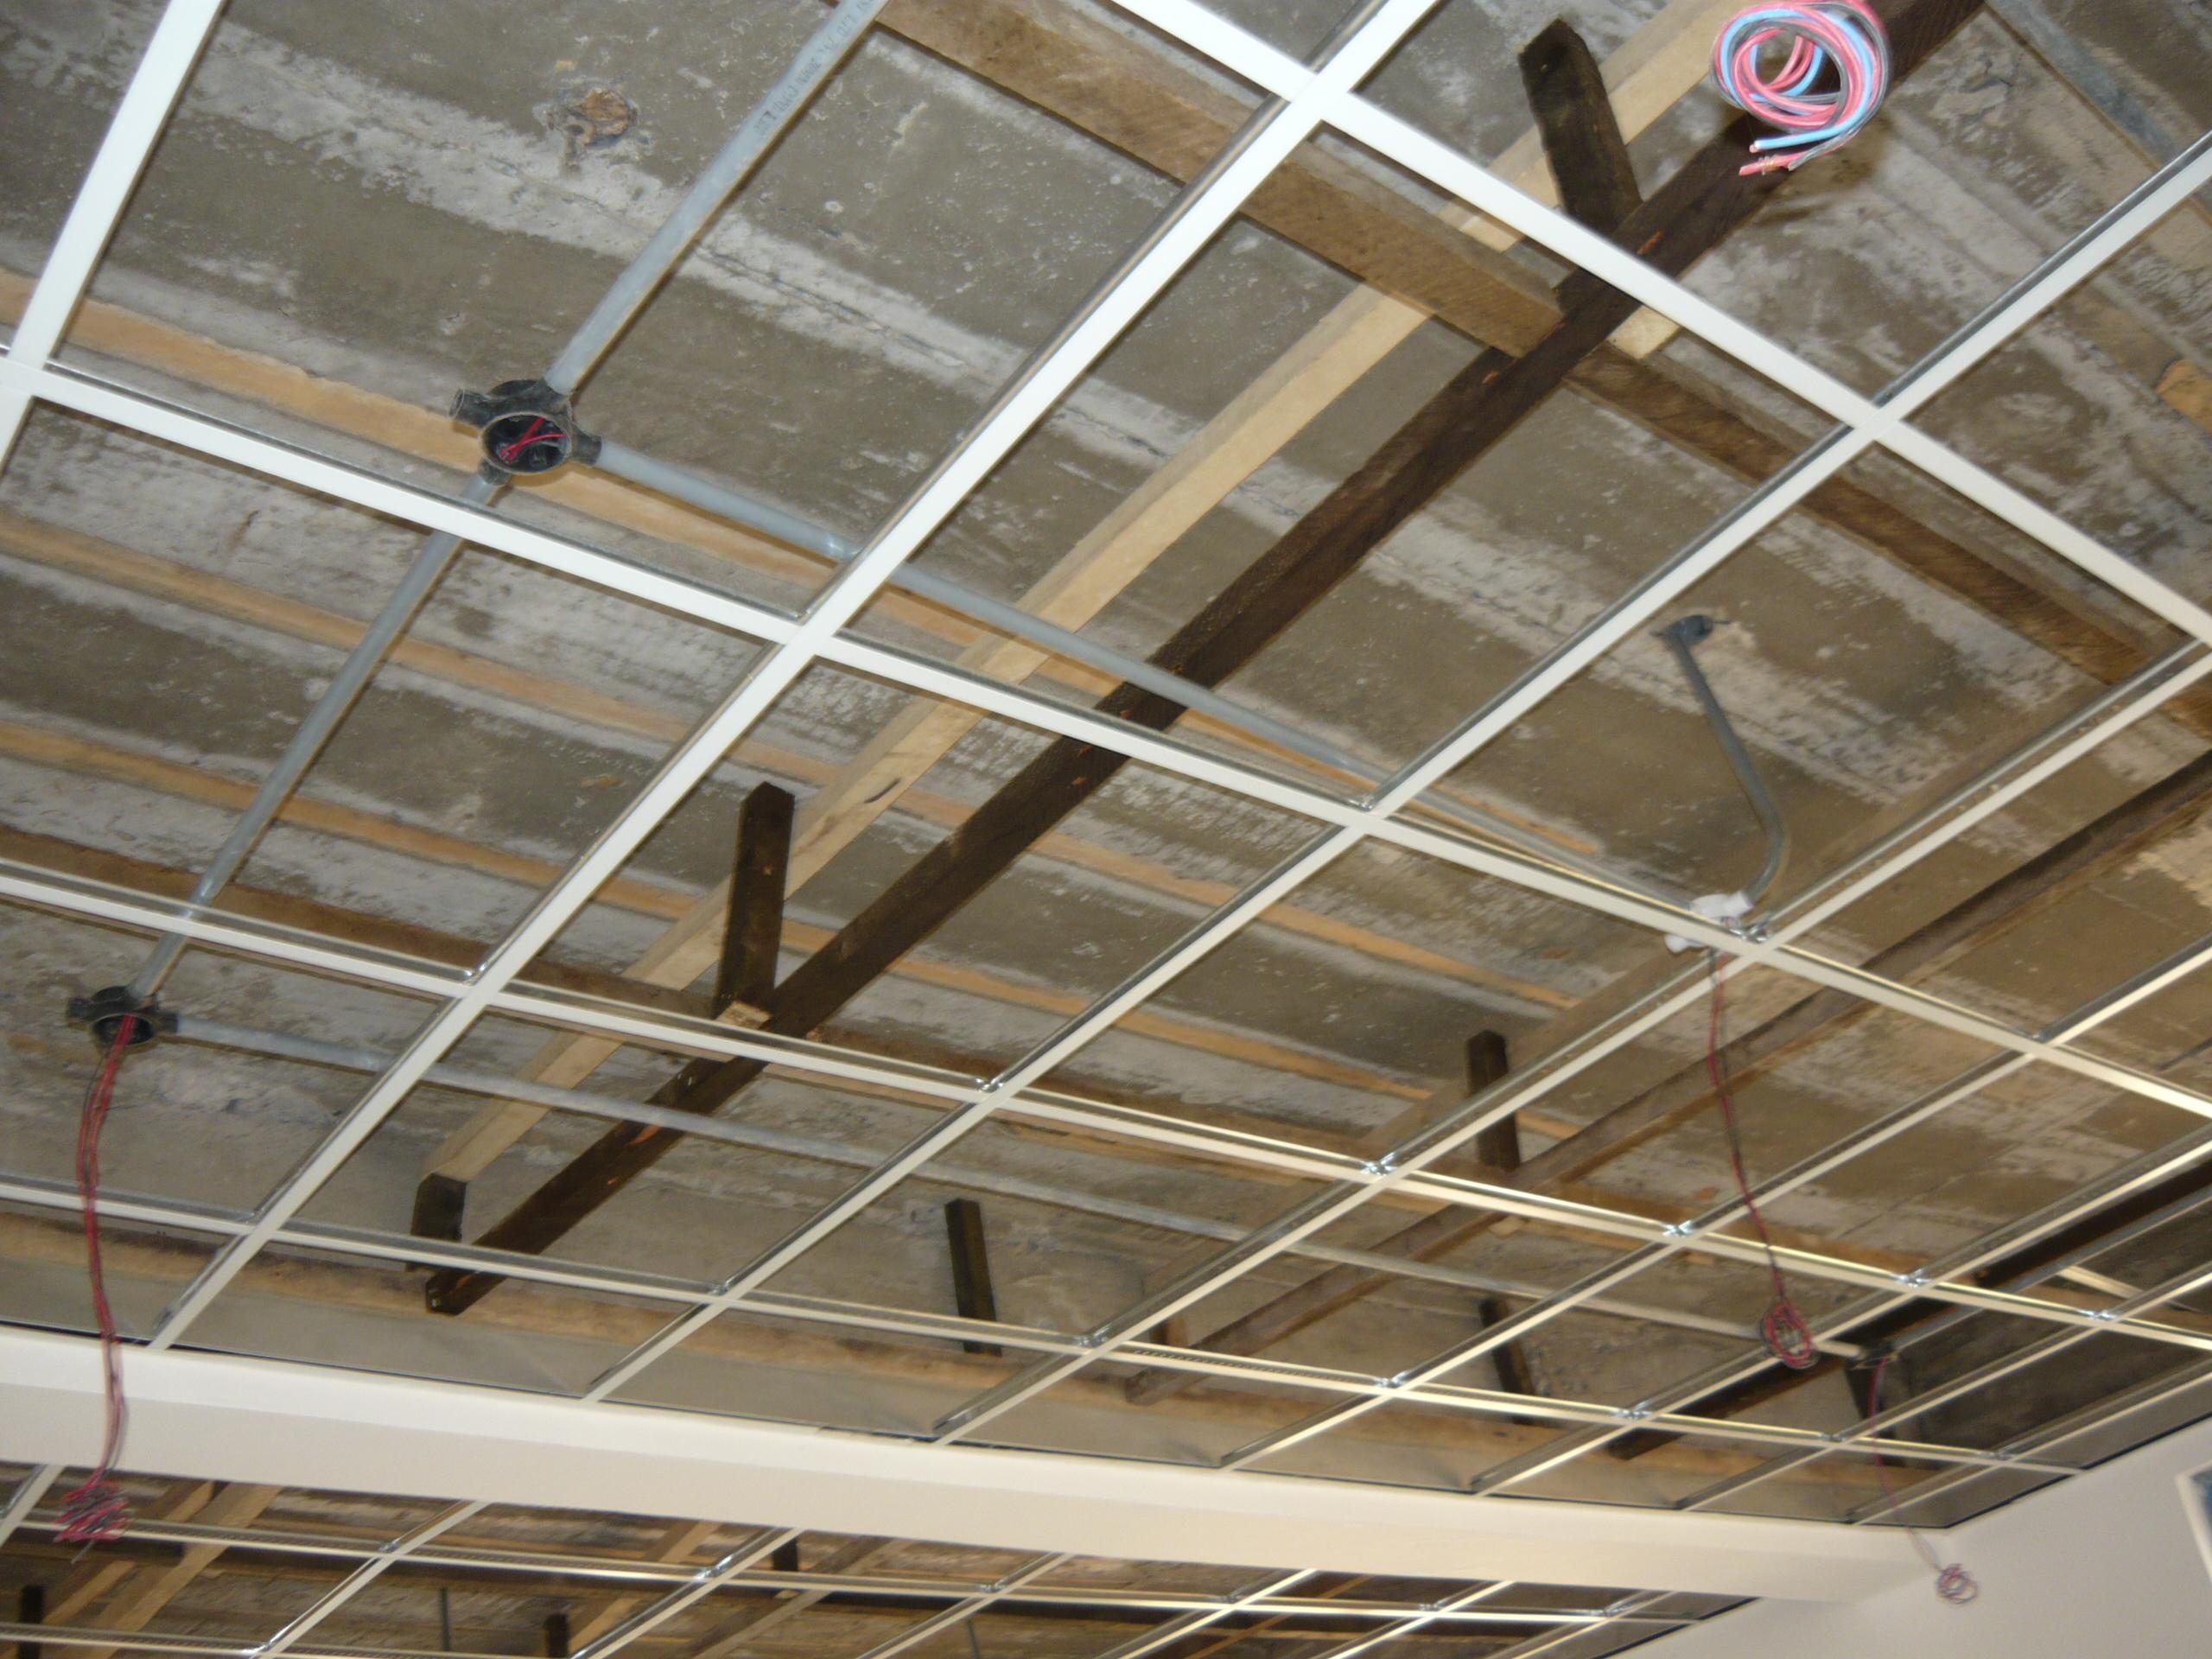 Ceiling Tile Track System Ceiling Tile Track System ceiling grid system thalas industry ltd 2560 X 1920